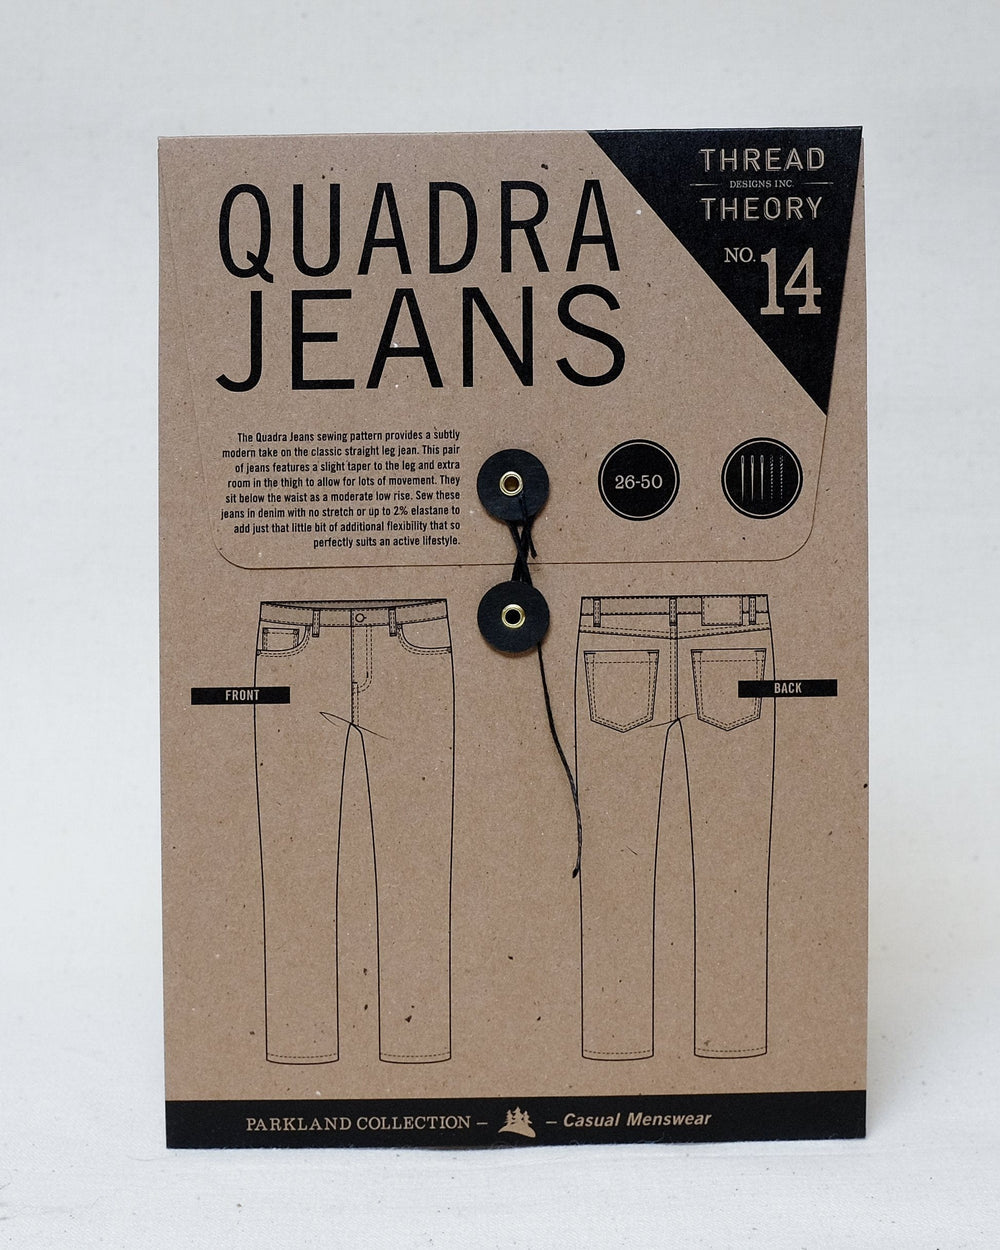 Quadra Jeans - Thread Theory